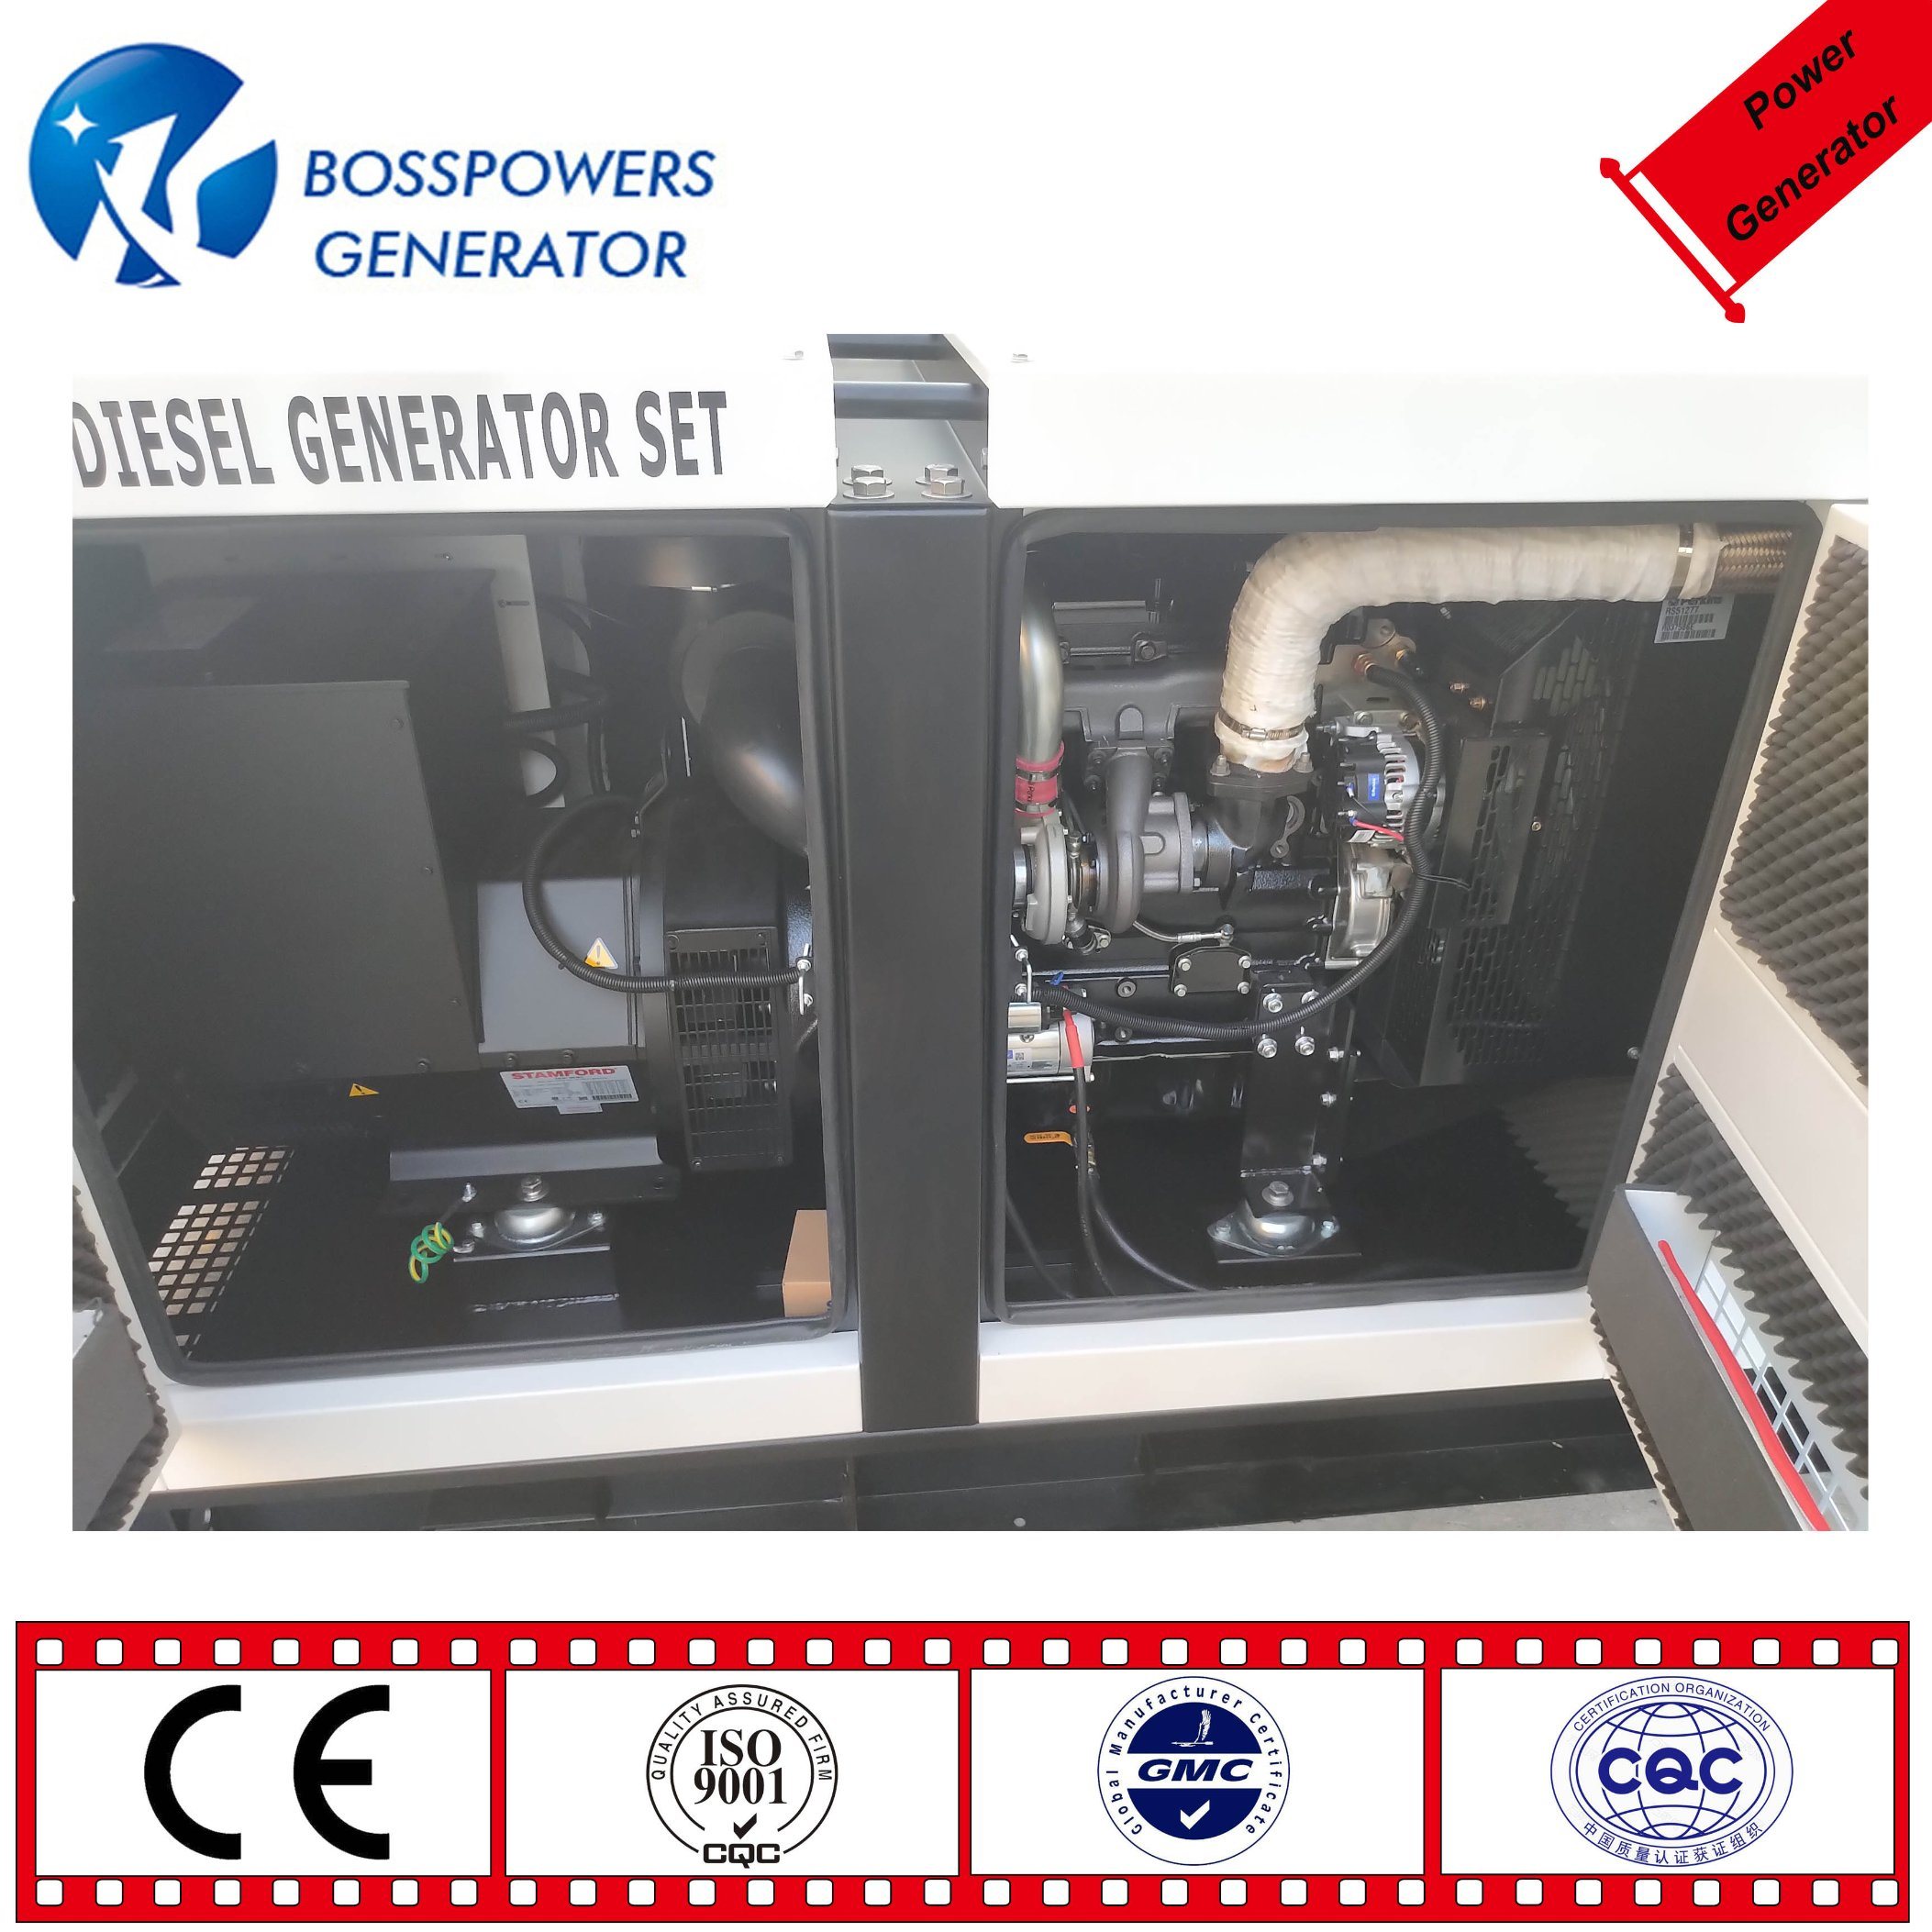 Boss Power Diesel Generator, Canopy/Slient Type, Power Range From 6kVA to 2500kVA, Cummins, Perkins, Isuzu, Doosan, Deutz, , Leroy Somer, Stamford.